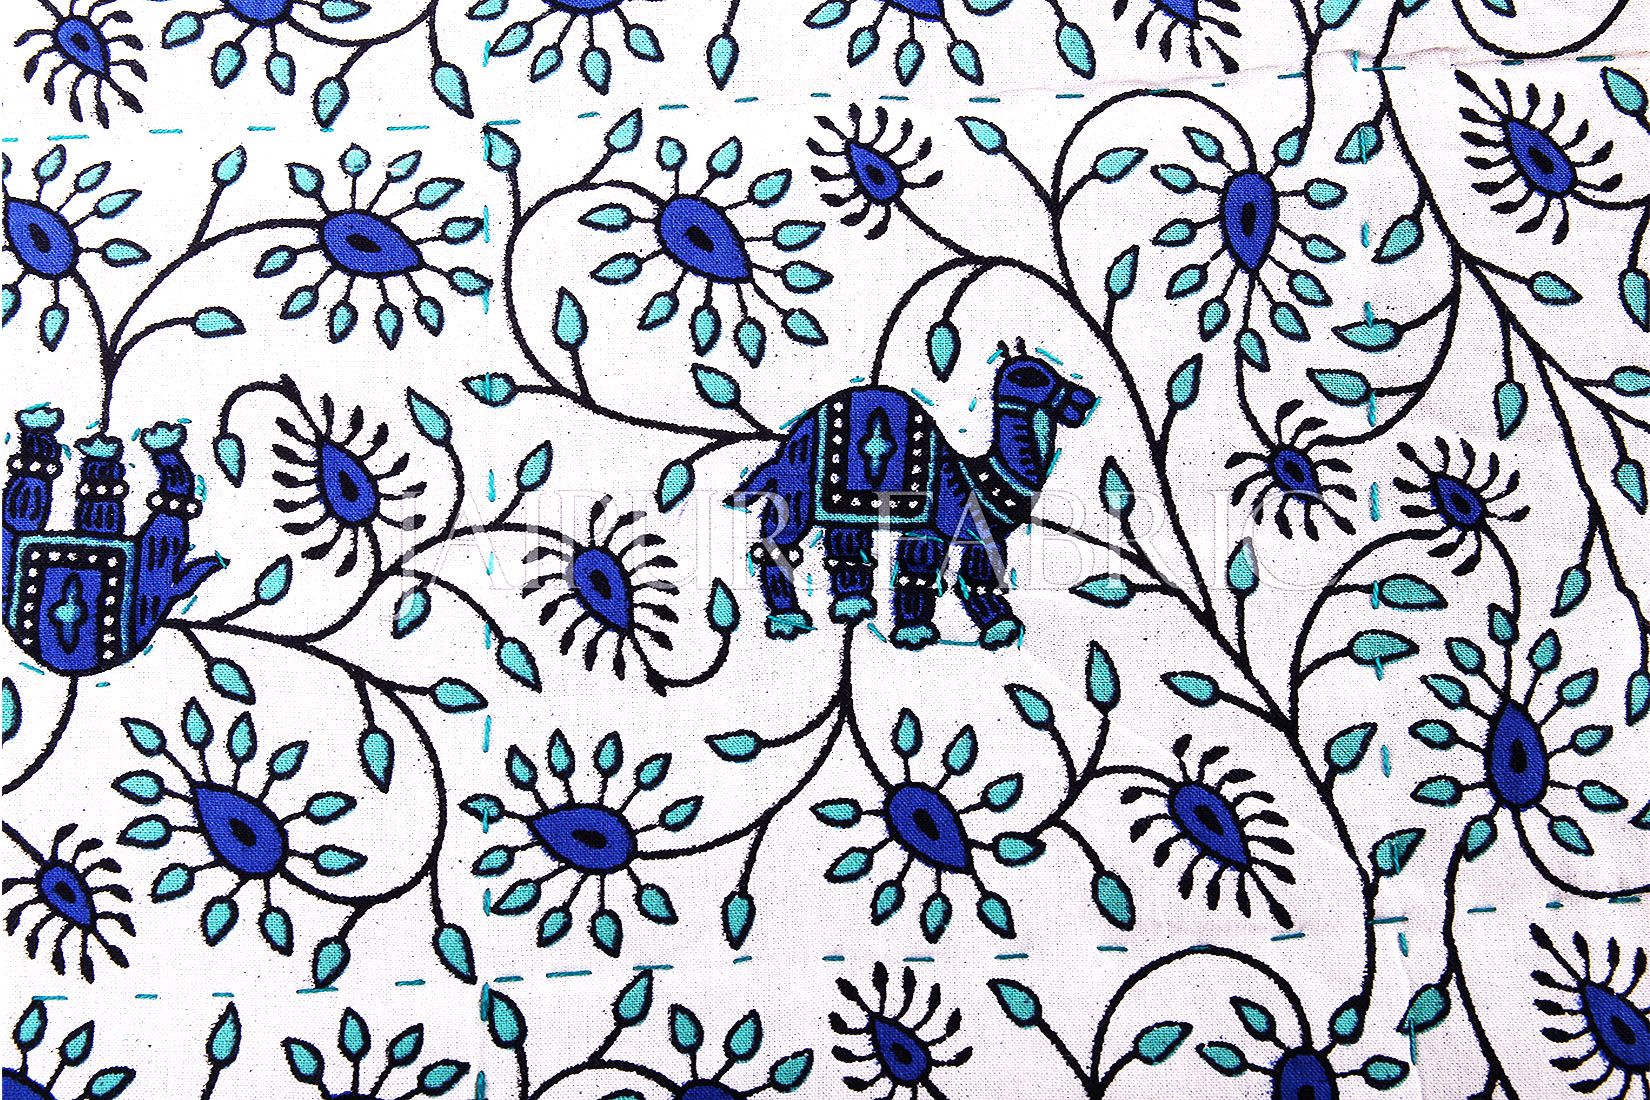 Blue Rajasthani Camel Border Flower Print Cotton AC Double Bed Quilt